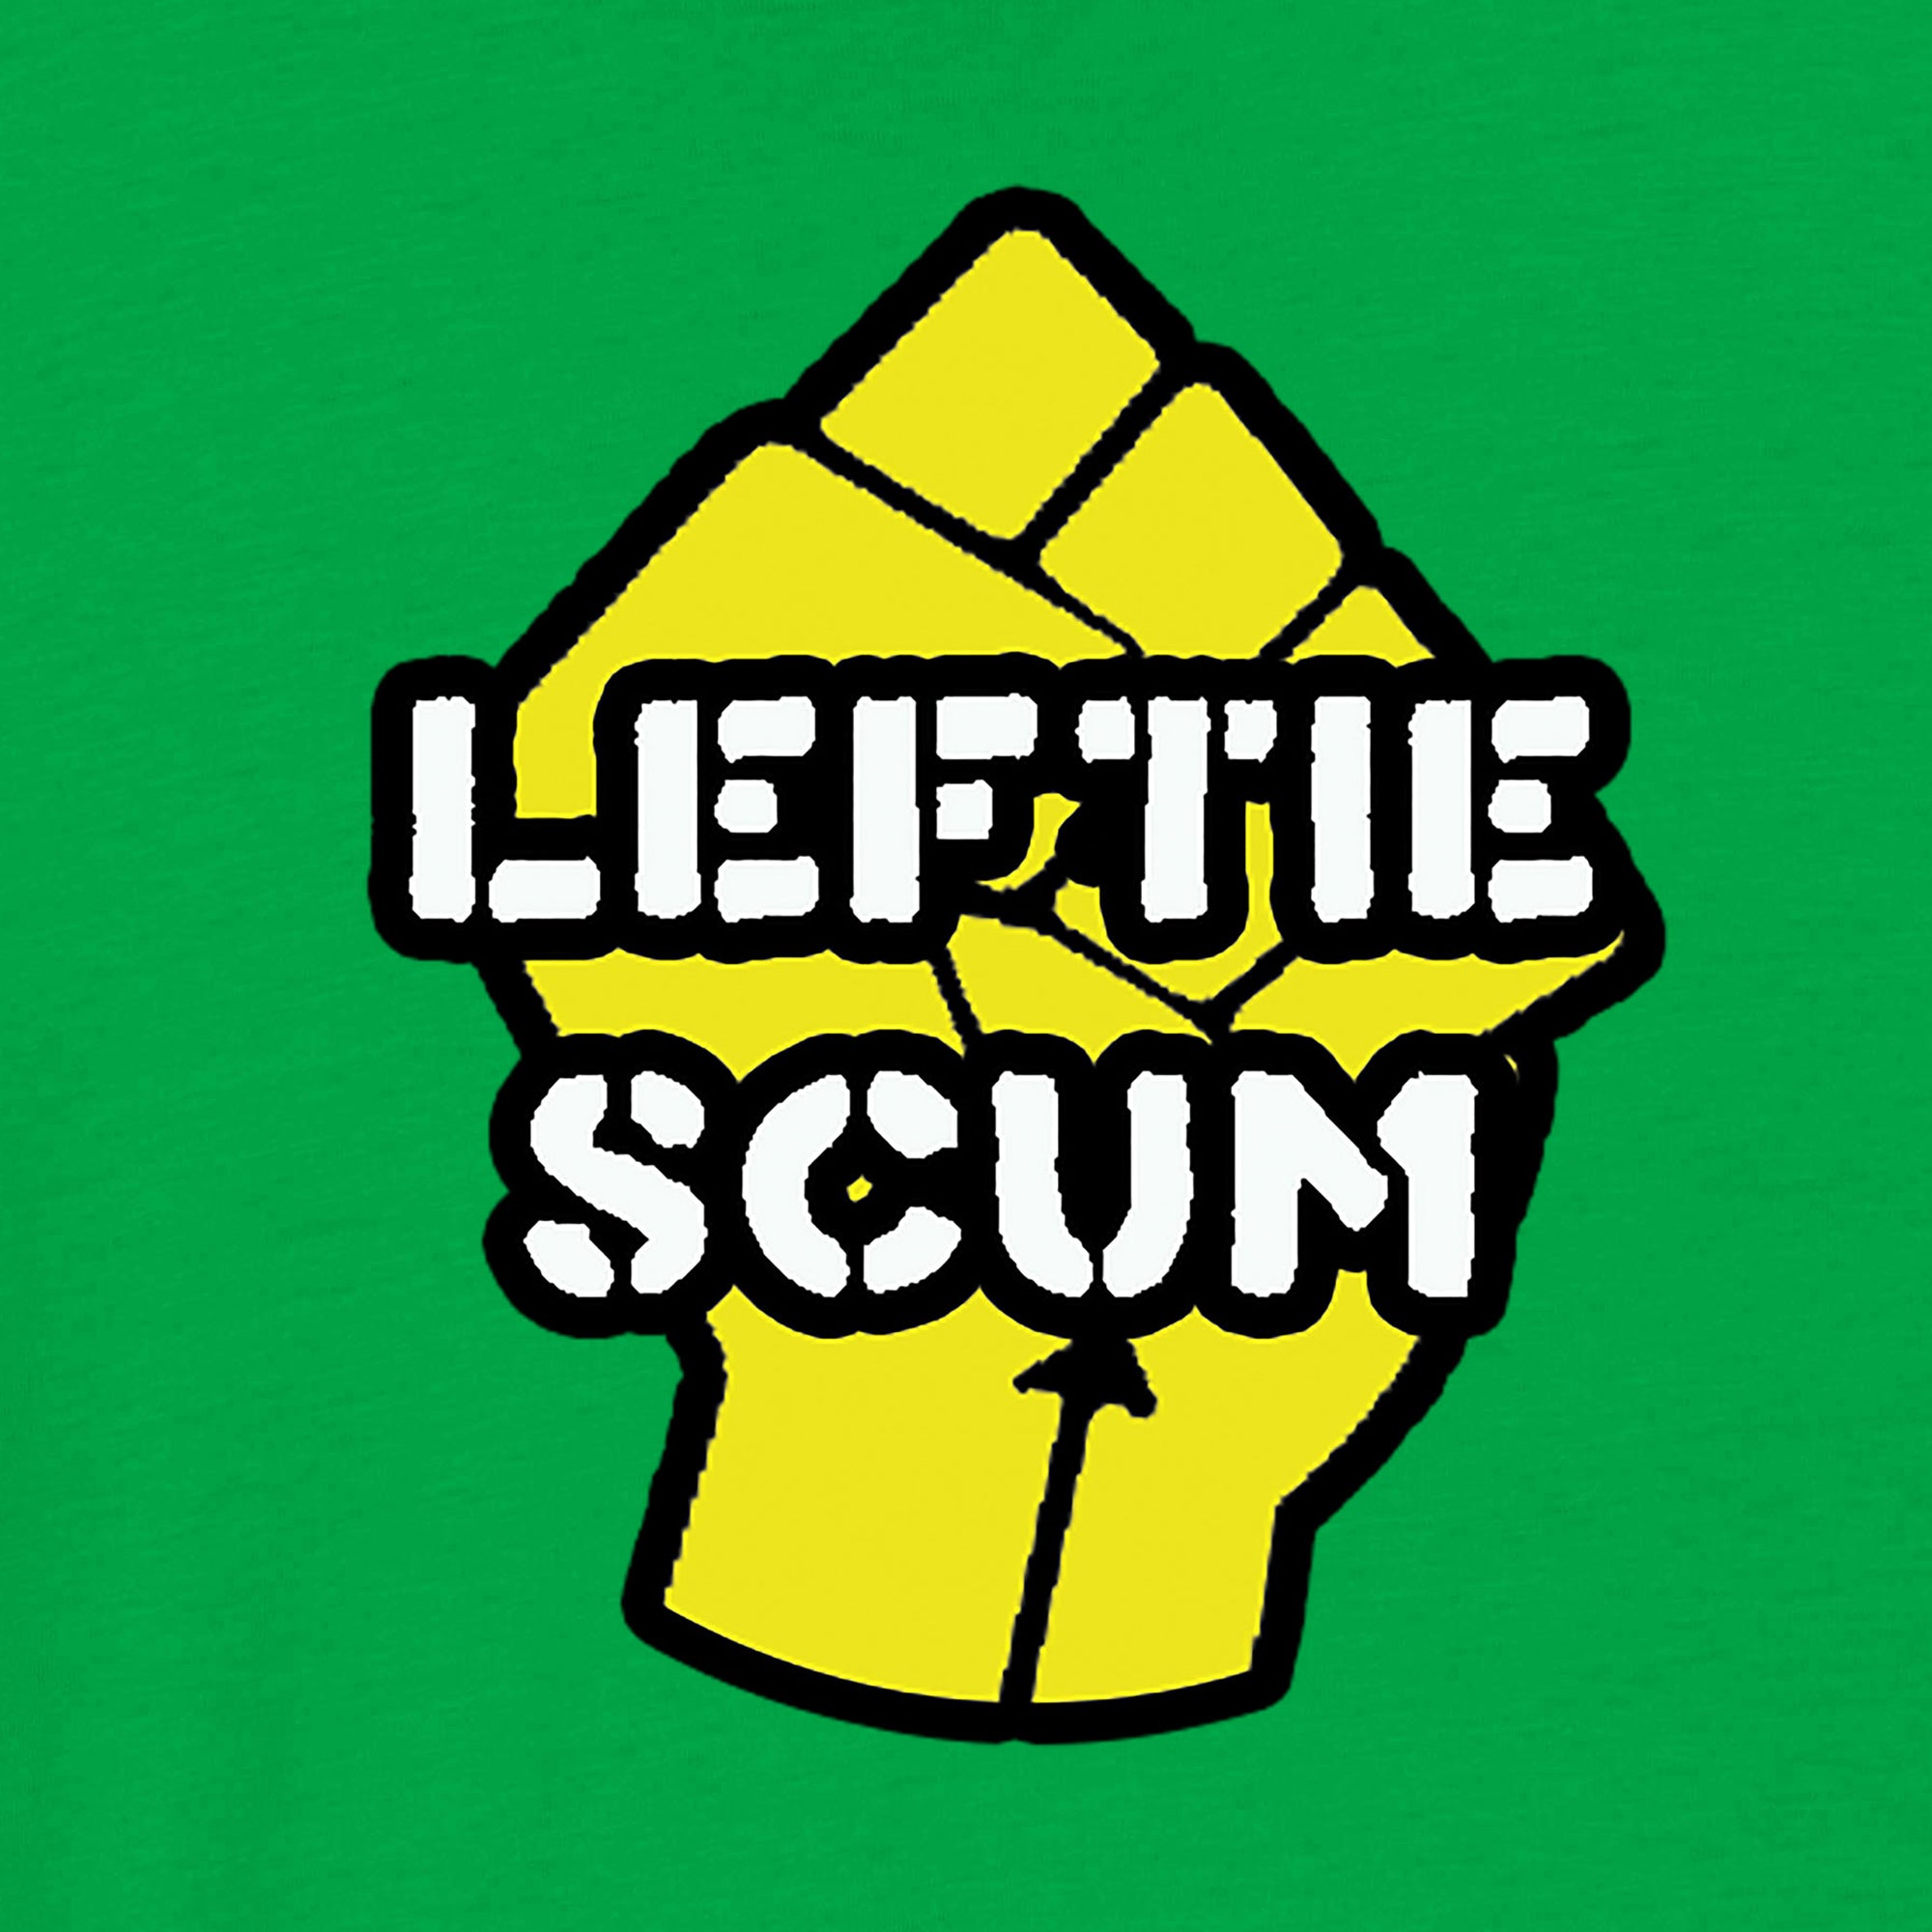 HEAVY MANNERS - Leftie Scum (Fresh Green) T Shirt